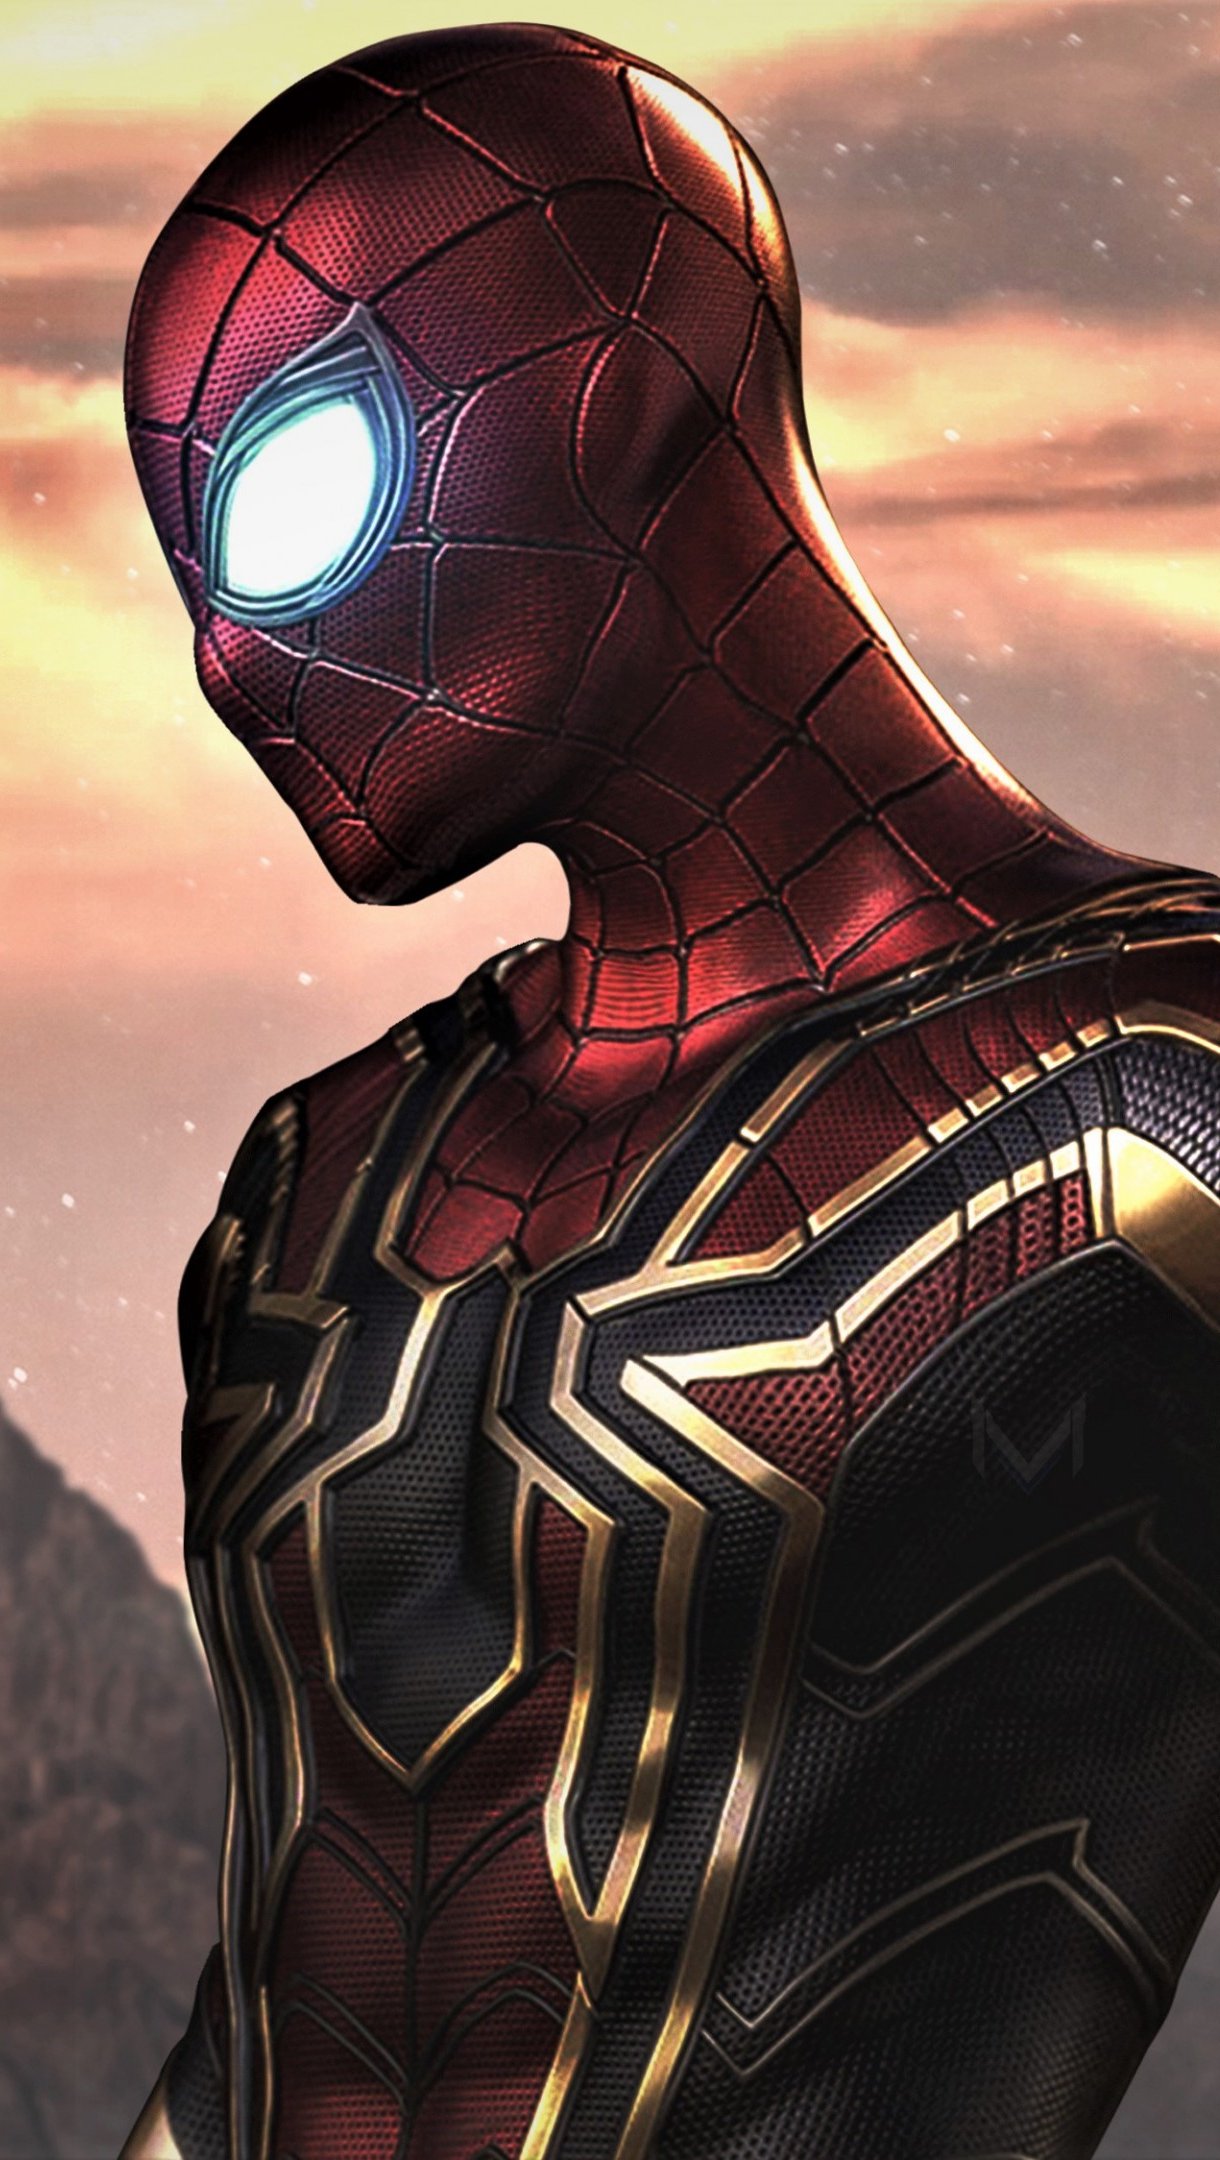 Spider-Man: Far From Home Wallpaper 4k Ultra HD ID:3284